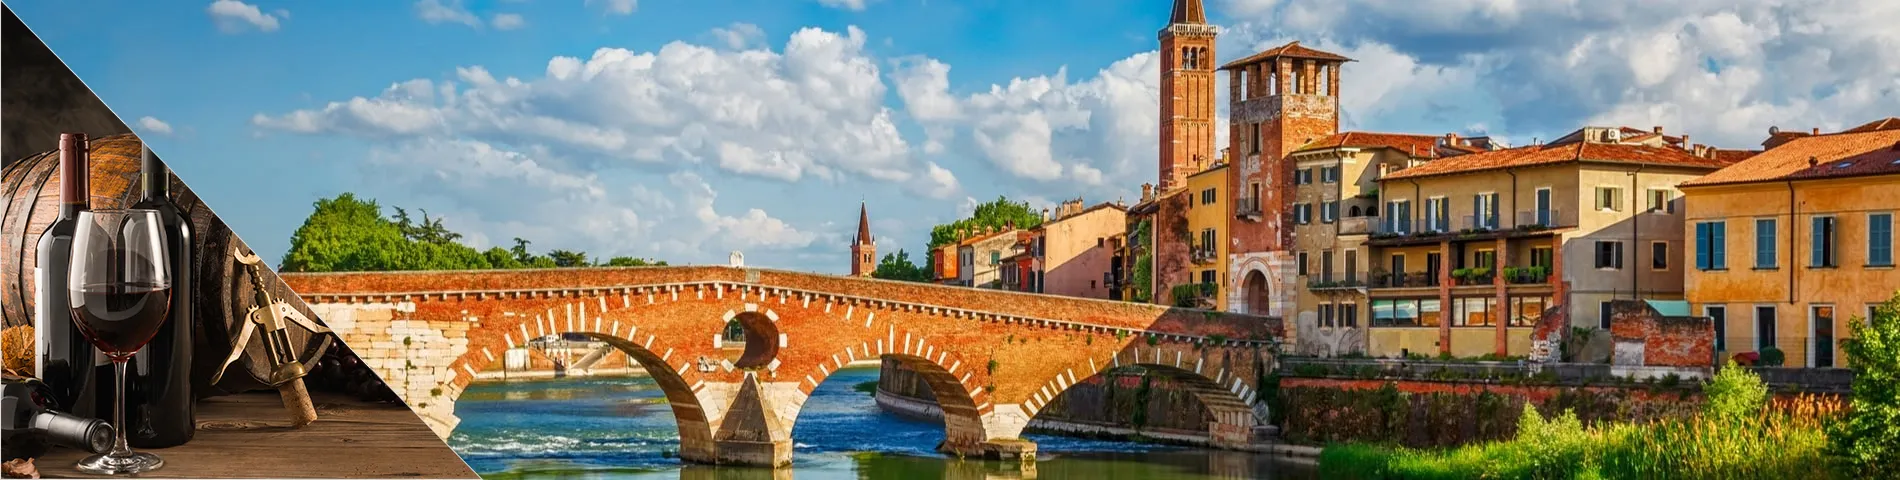 Verona - Taliančina a enológia